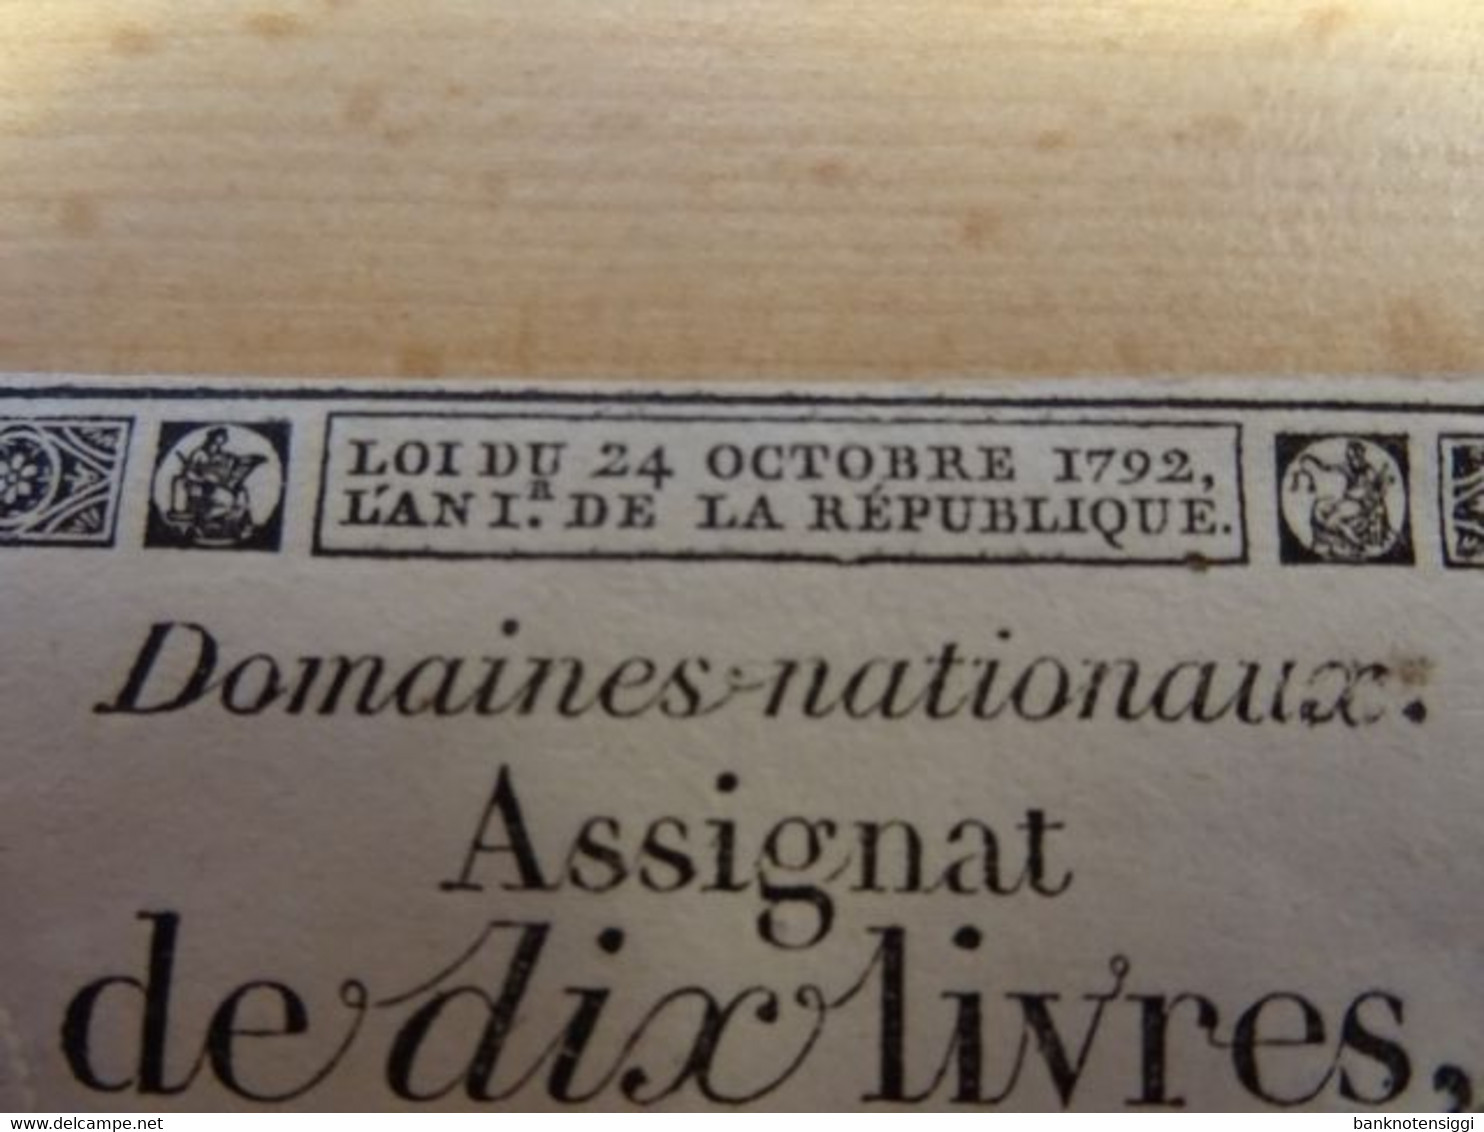 Banknote Frankreich Assignat 10 Livres 1792. - ...-1889 Francos Ancianos Circulantes Durante XIXesimo